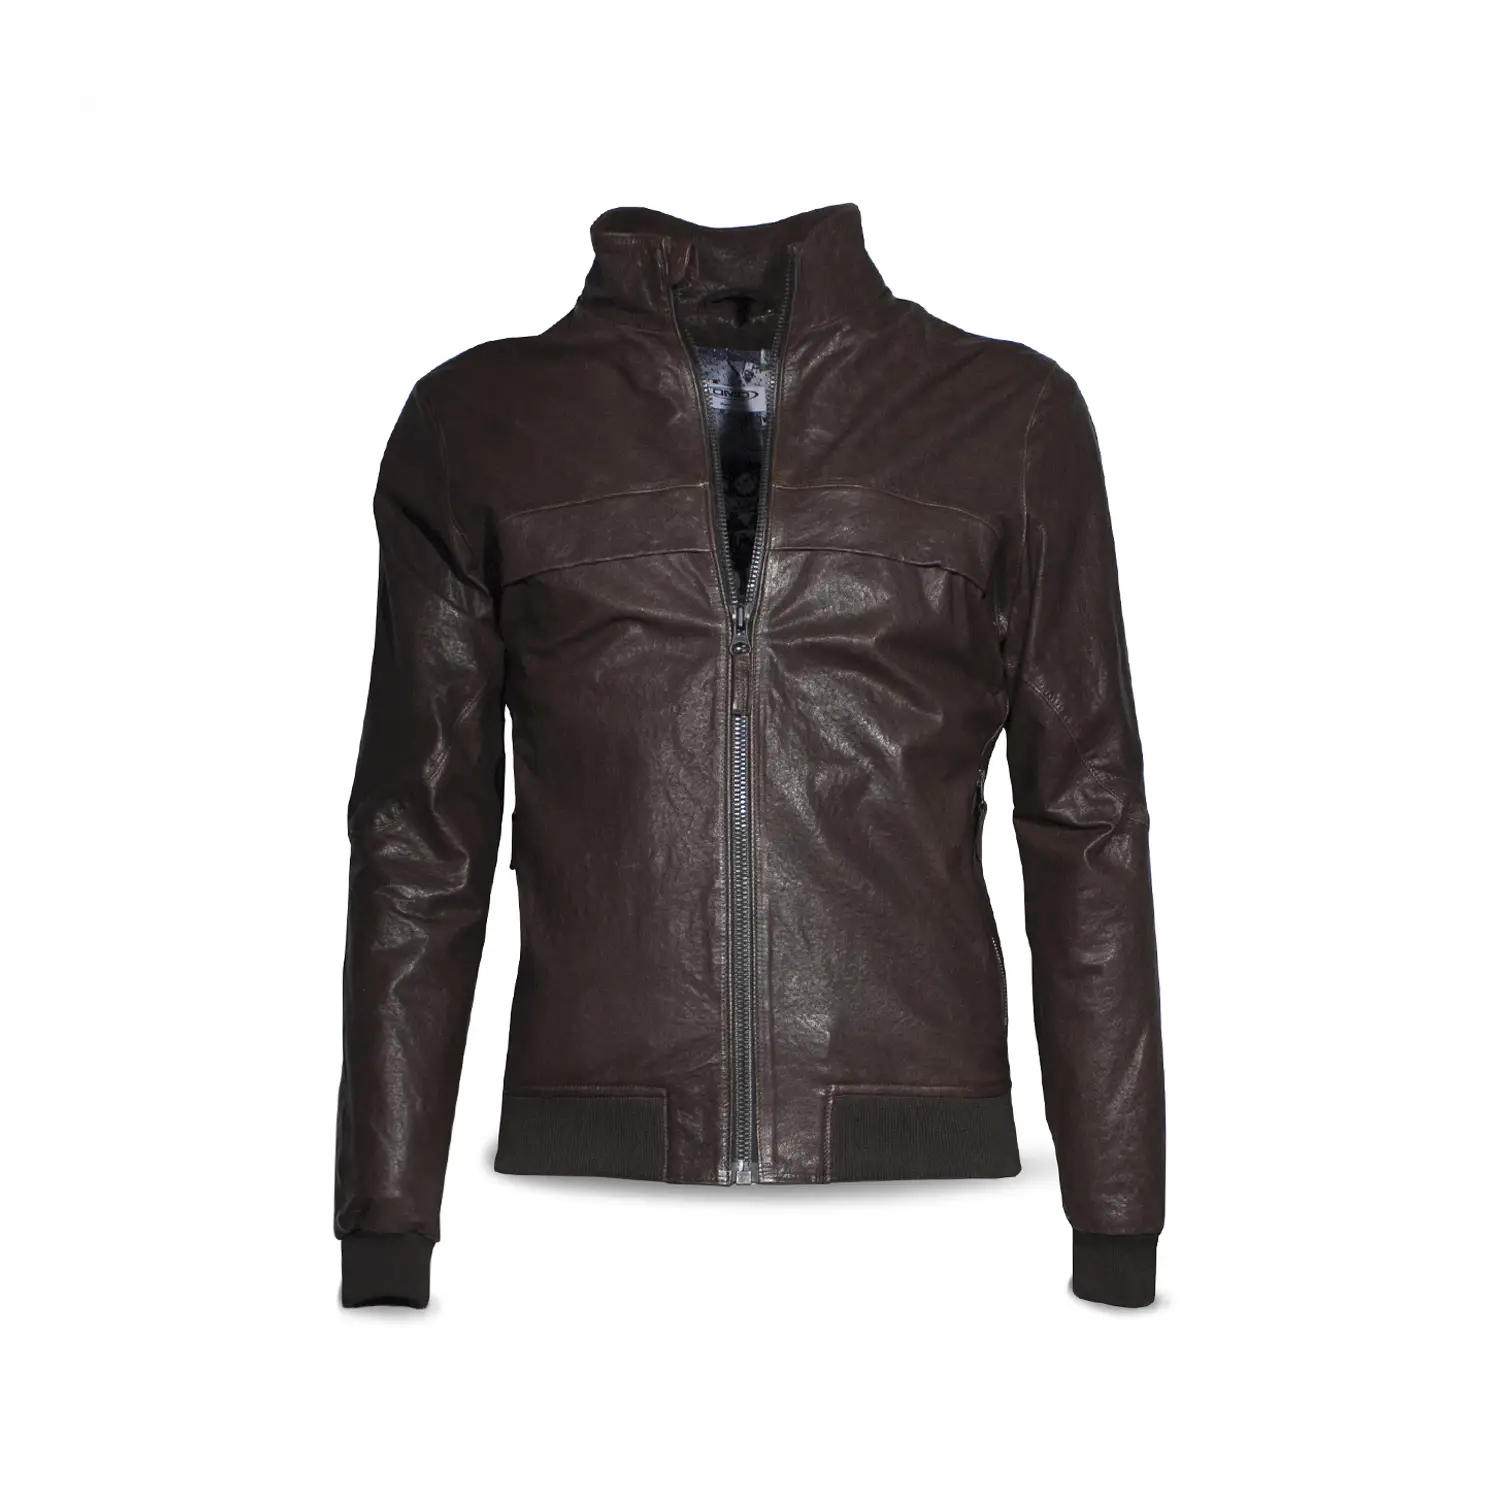 dmd.eu - BUNNY BROWN (NICHT GENEHMIGT) DMD – Bunny Brown Leather (non omologata) – front